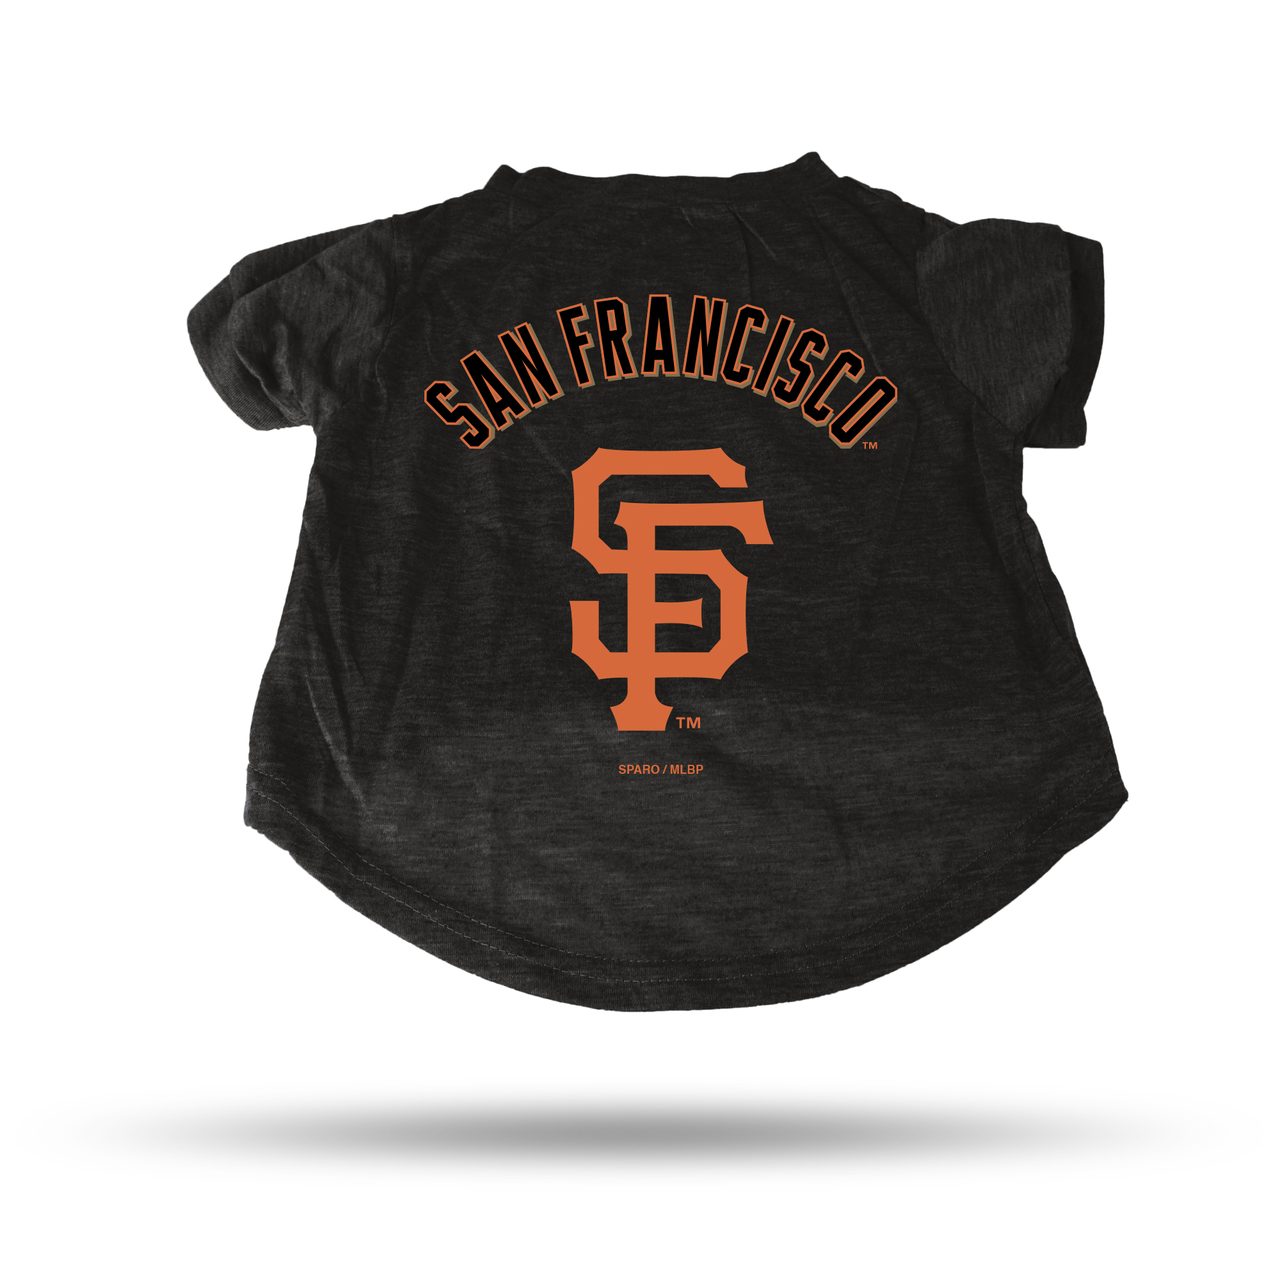 San Francisco Giants Pet Tee Shirt Size M